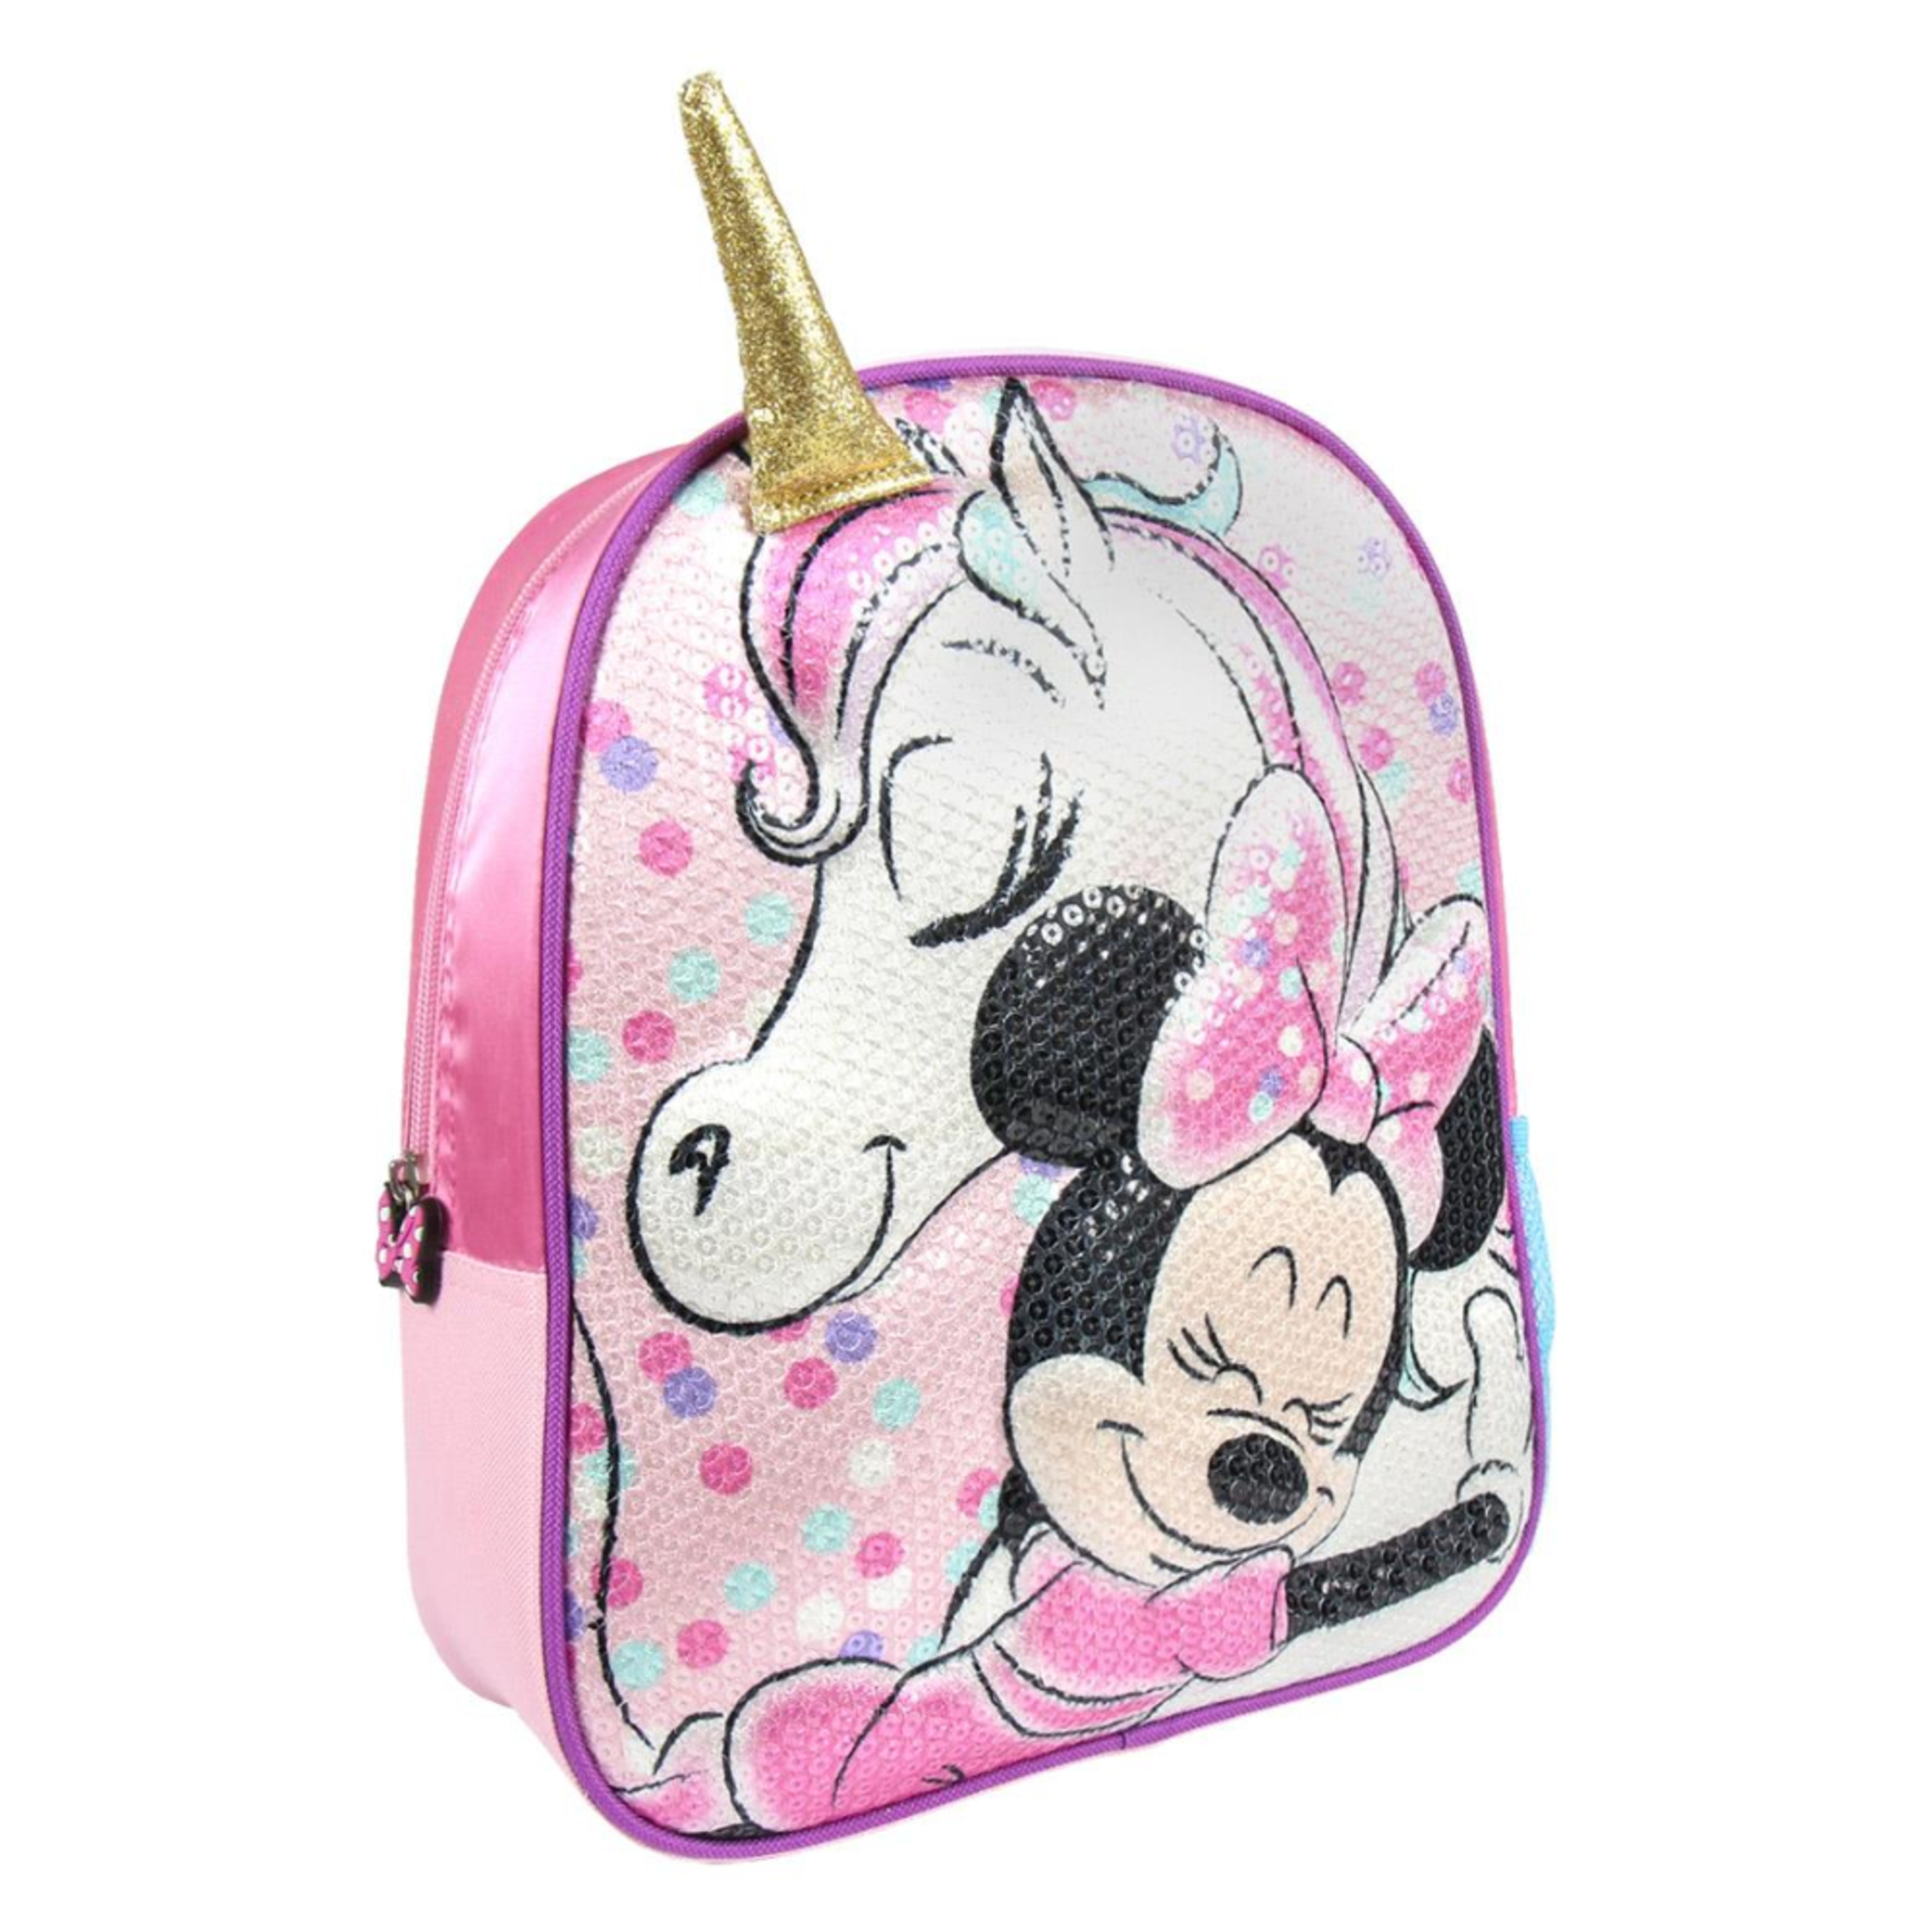 Mochila Minnie Mouse 71265 - rosa - 